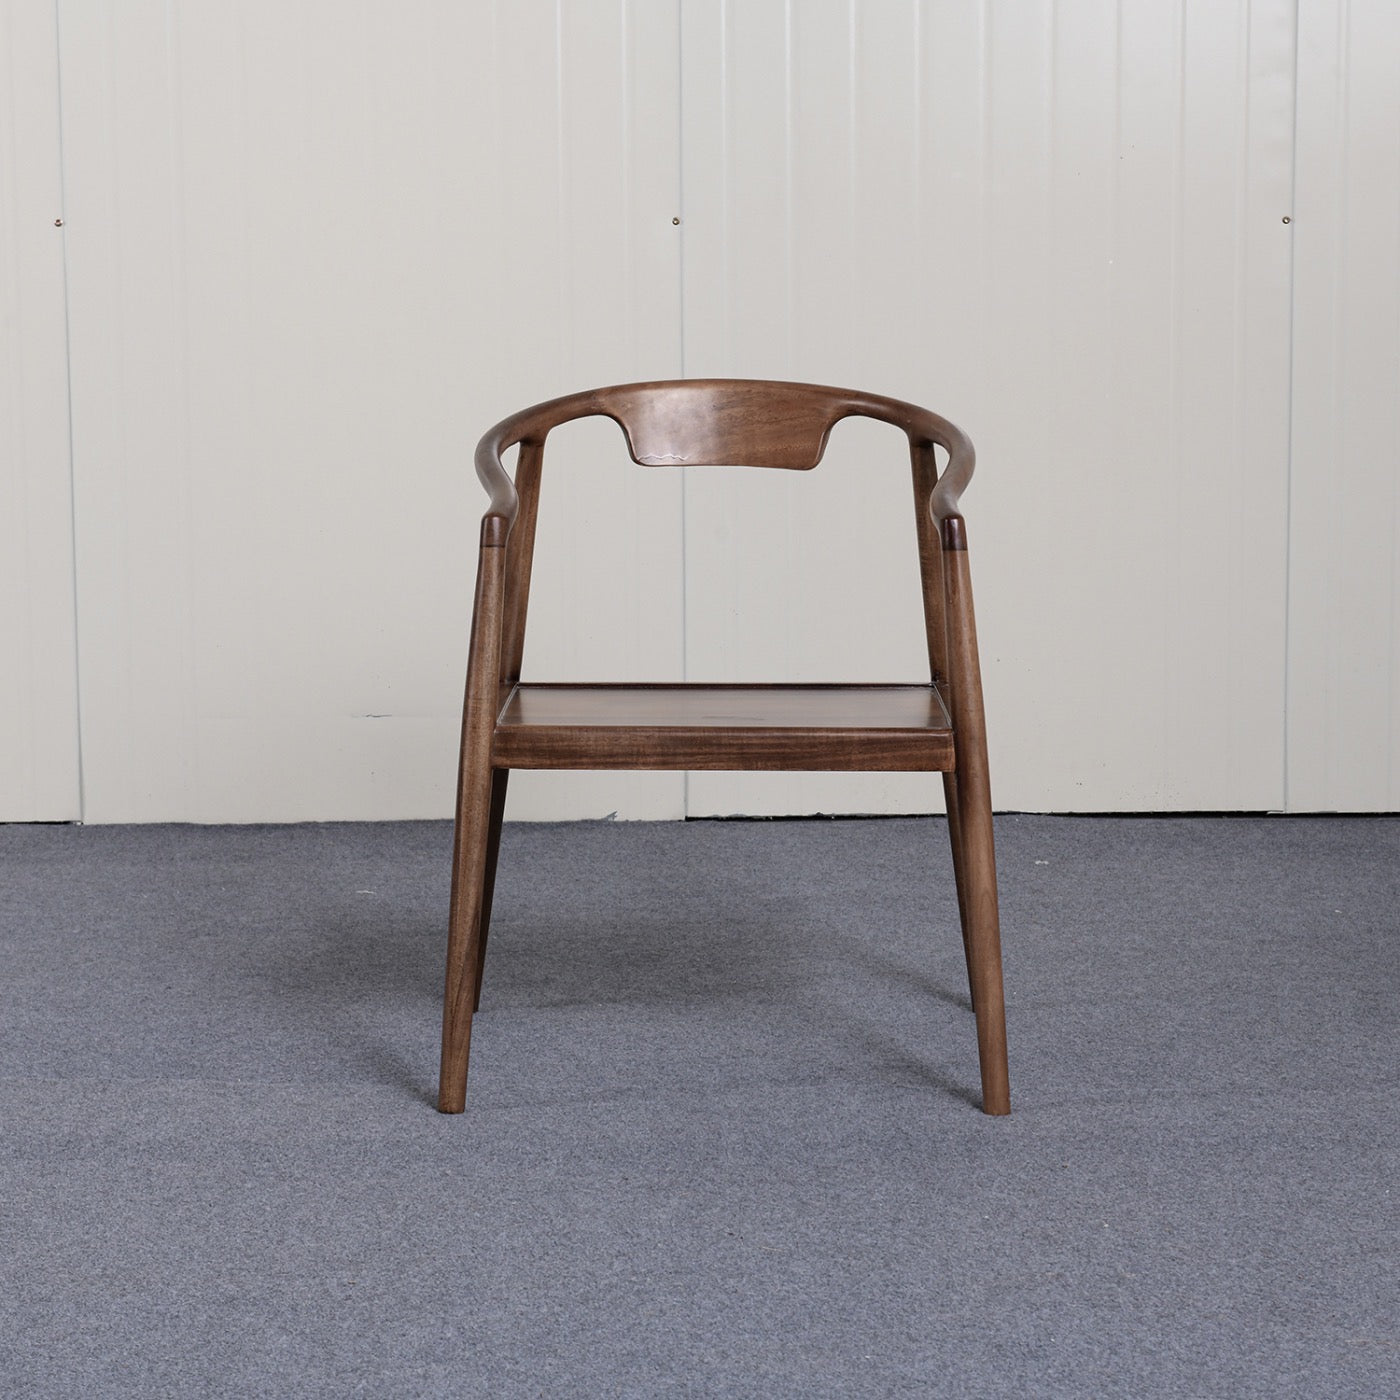 Chaise en cuir, chaise en noyer, chaise en bois massif, chaise latérale, chaise en bois, chaise de bureau